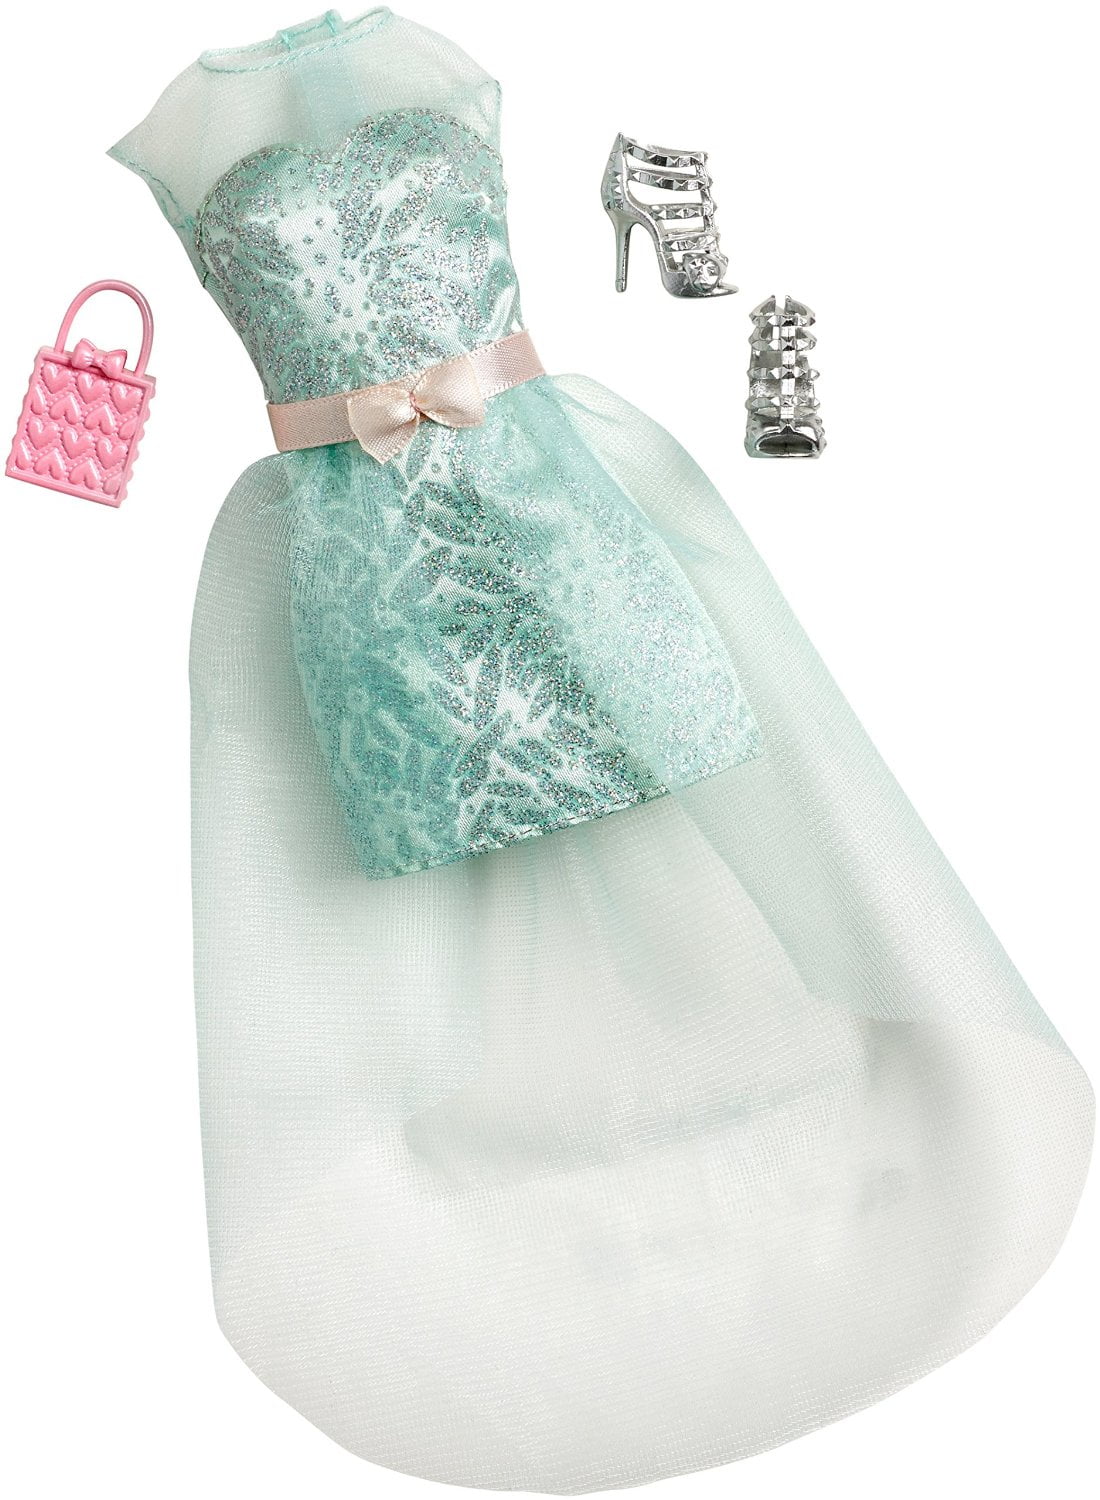 Barbie - Mattel Barbie Complete Look Fashion-green Dress - Walmart.com